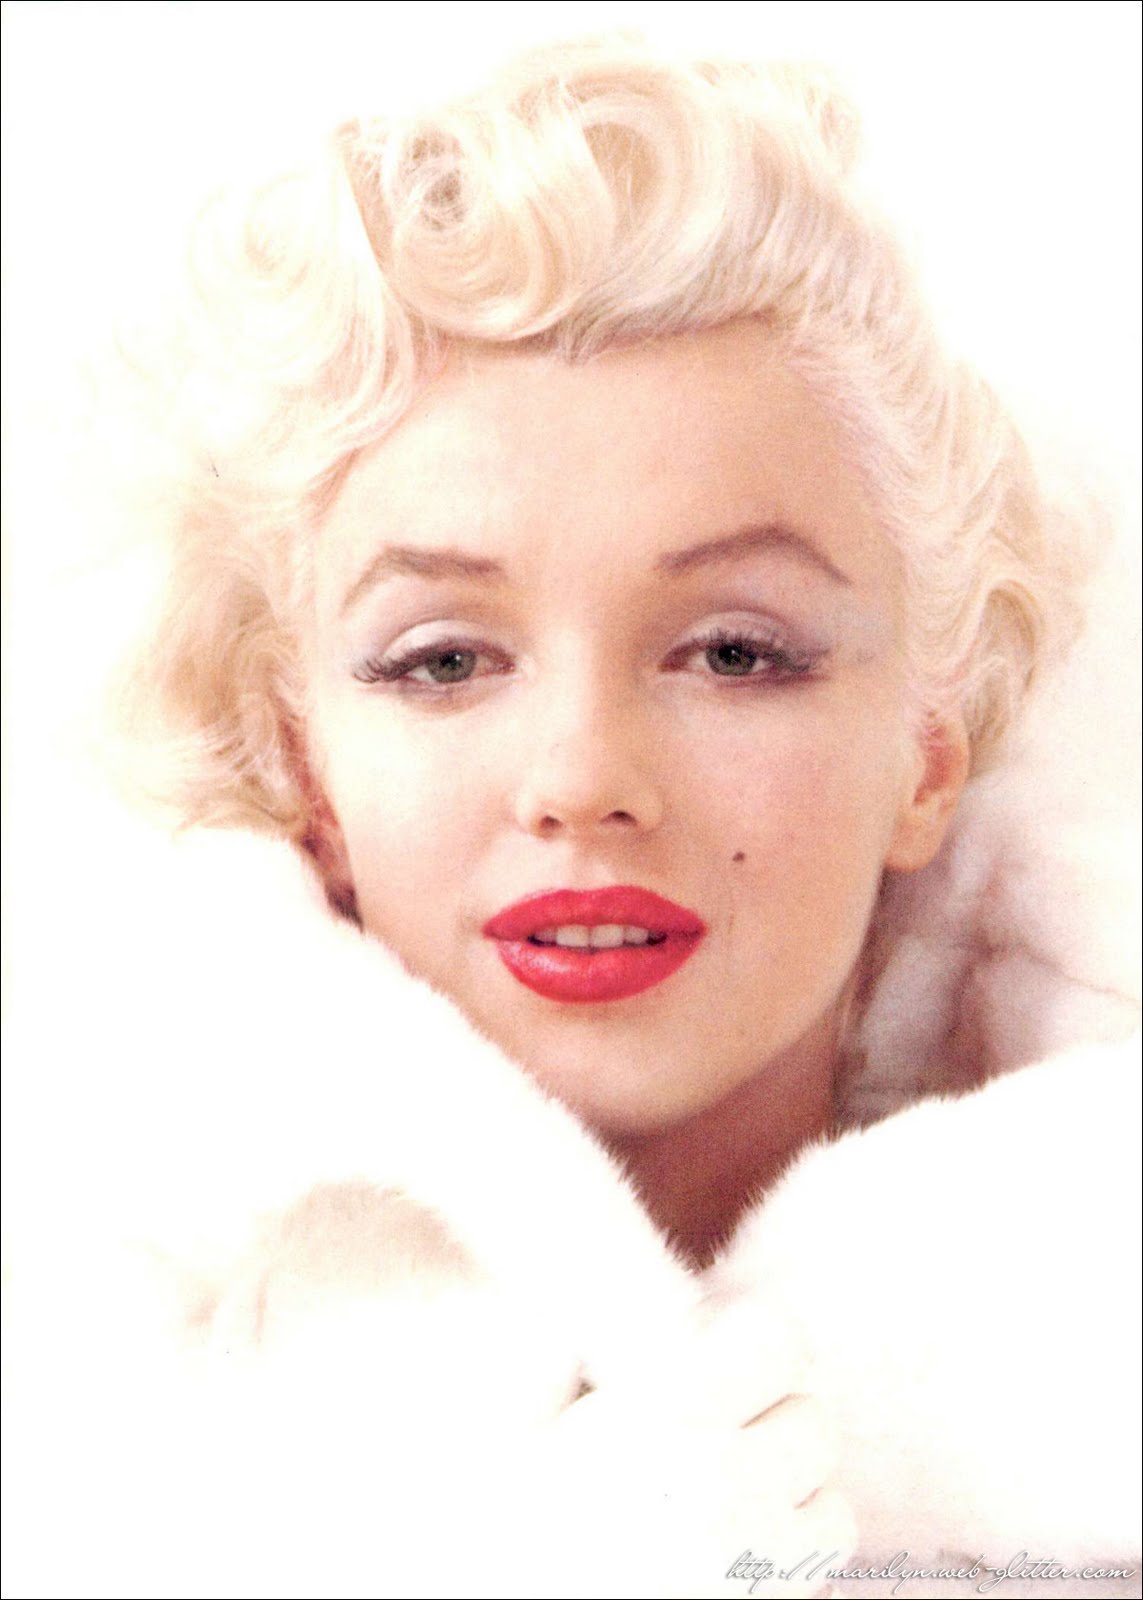 http://1.bp.blogspot.com/--CYWmbtYYyM/TePrXIWX0DI/AAAAAAAAKOc/DPHS2iQ9NyI/s1600/Marilyn-Monroe.jpg